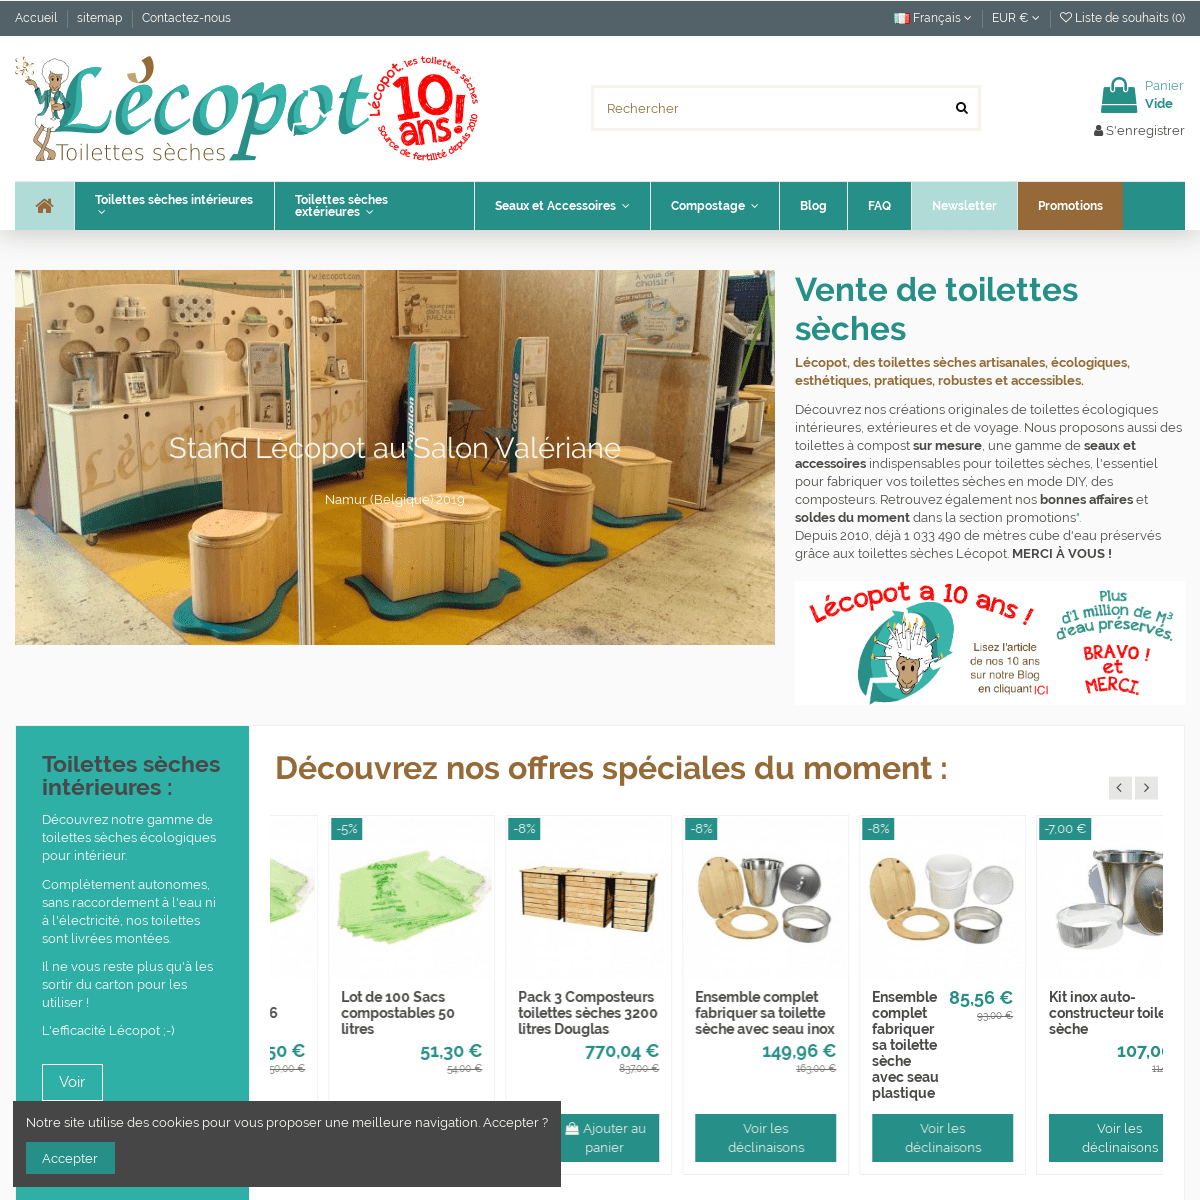 A complete backup of lecopot.com